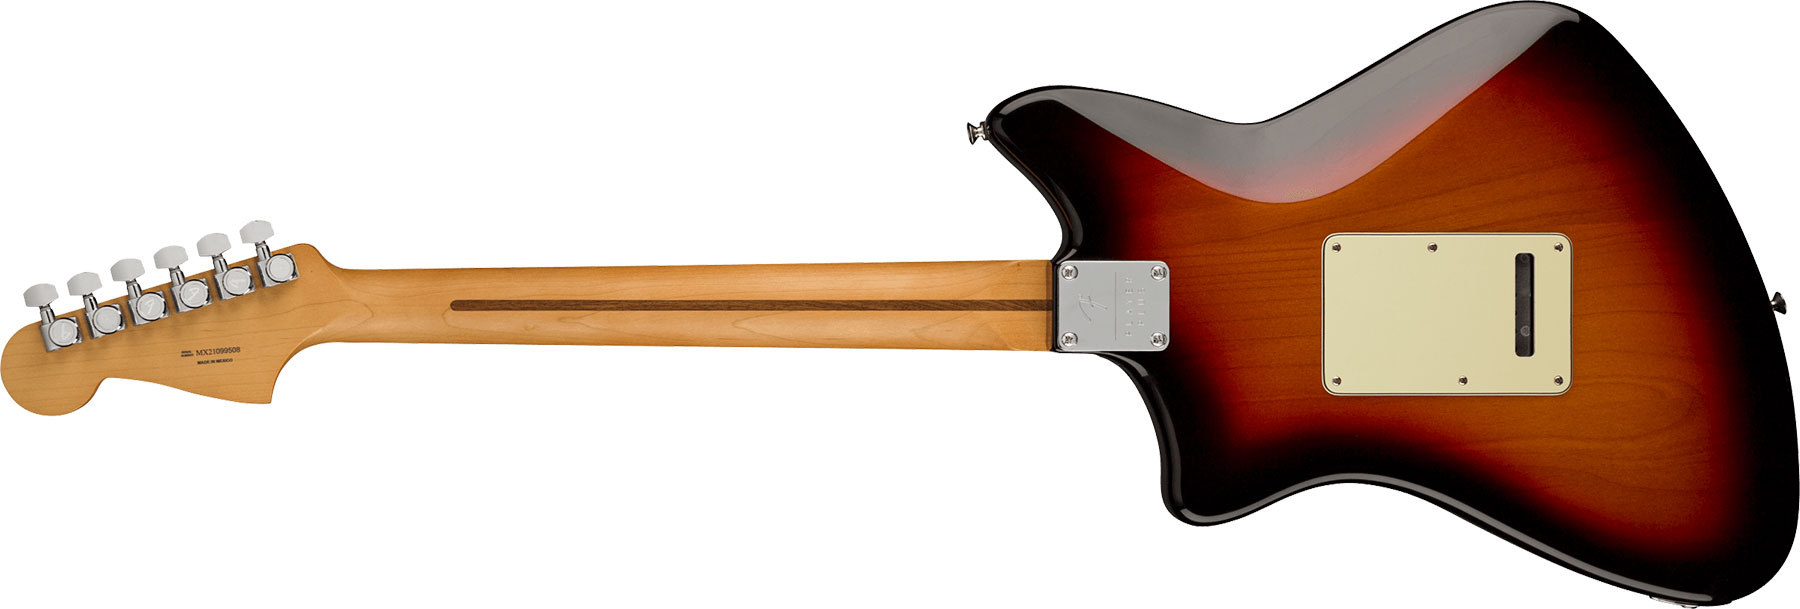 Fender Meteora Player Plus Hh Mex 2h Ht Mn - 3-color Sunburst - Retro rock electric guitar - Variation 1